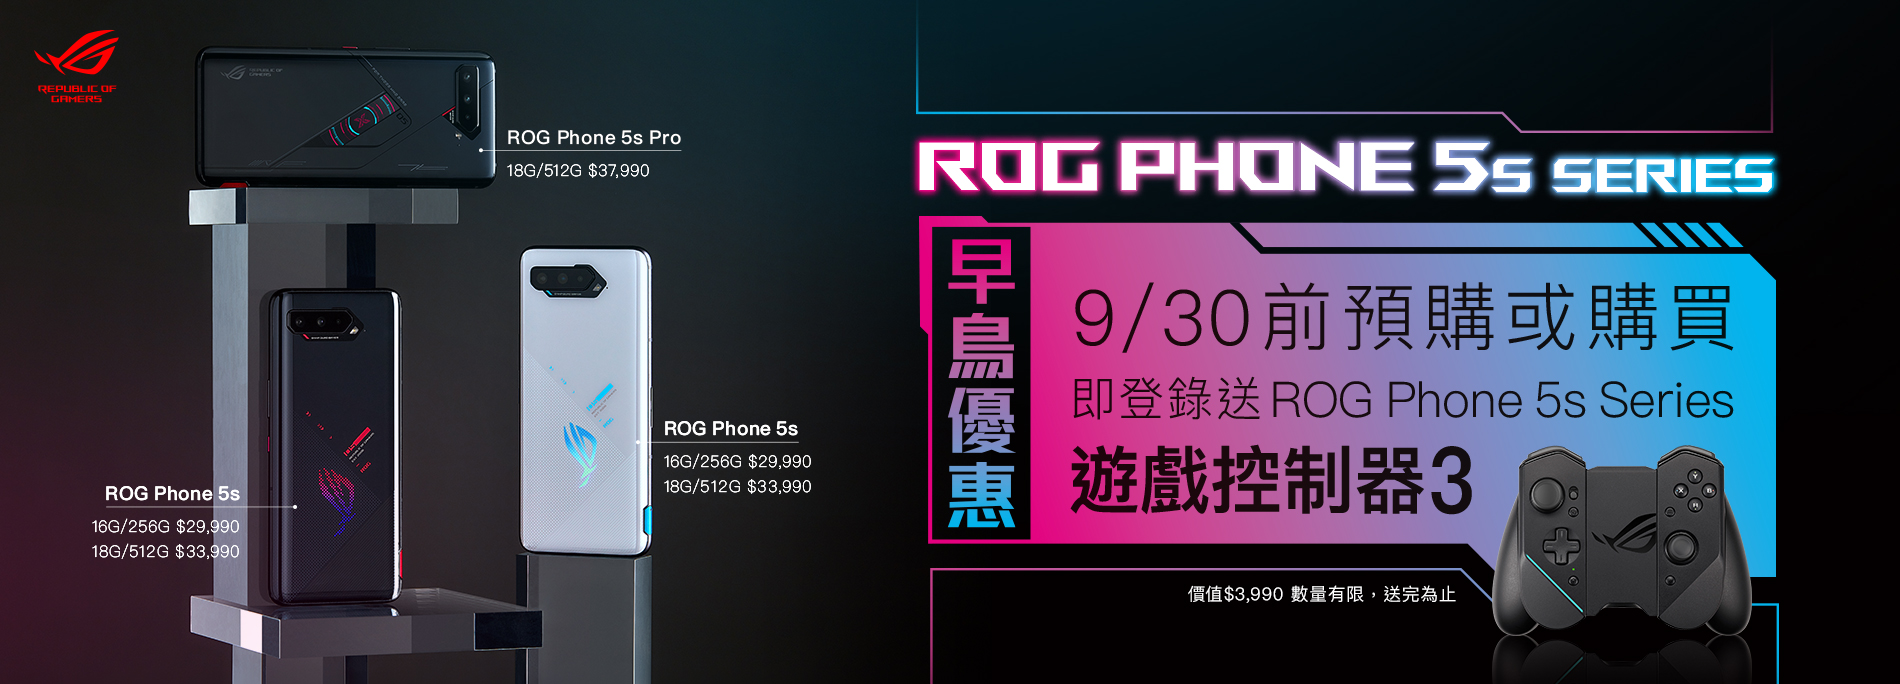 ROG Phone 5s Series 早鳥優惠